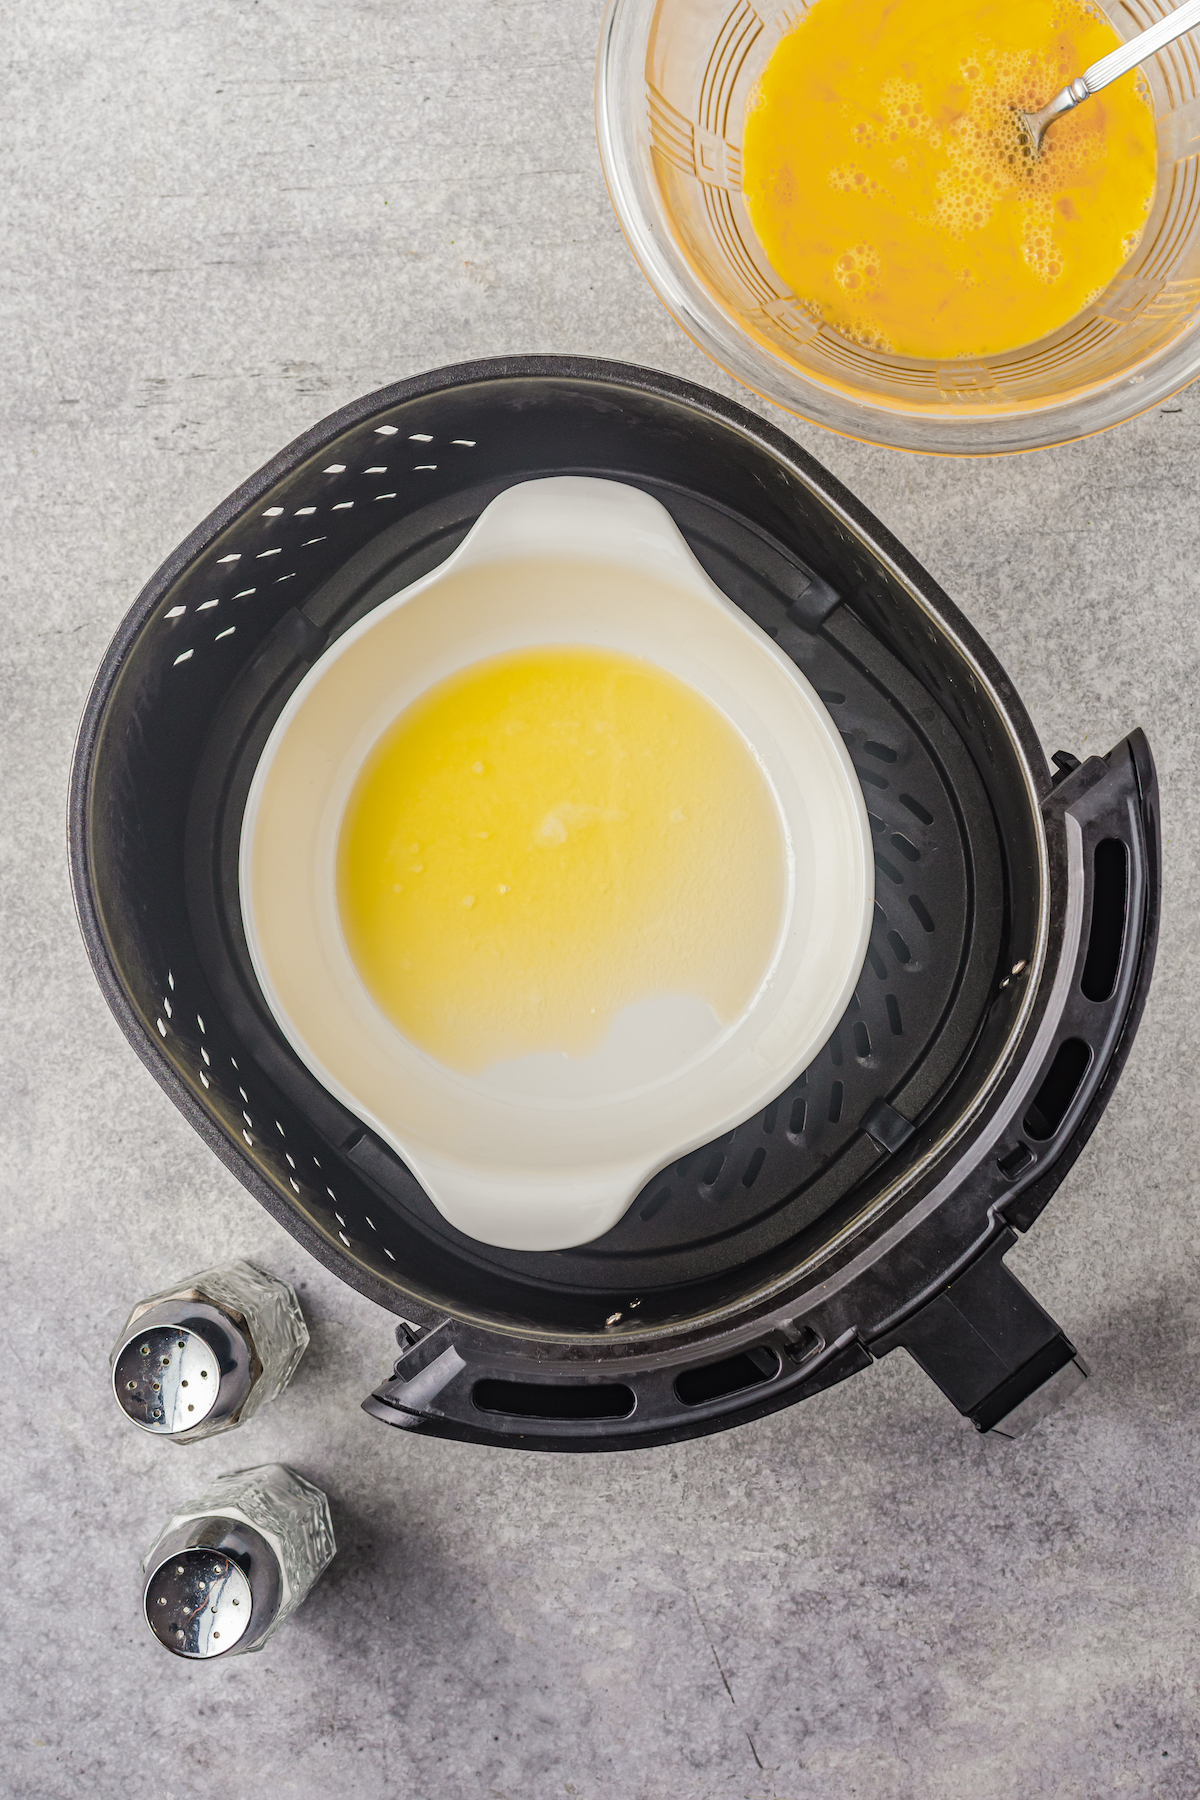 Butter is melted in a pot inside an air fryer.